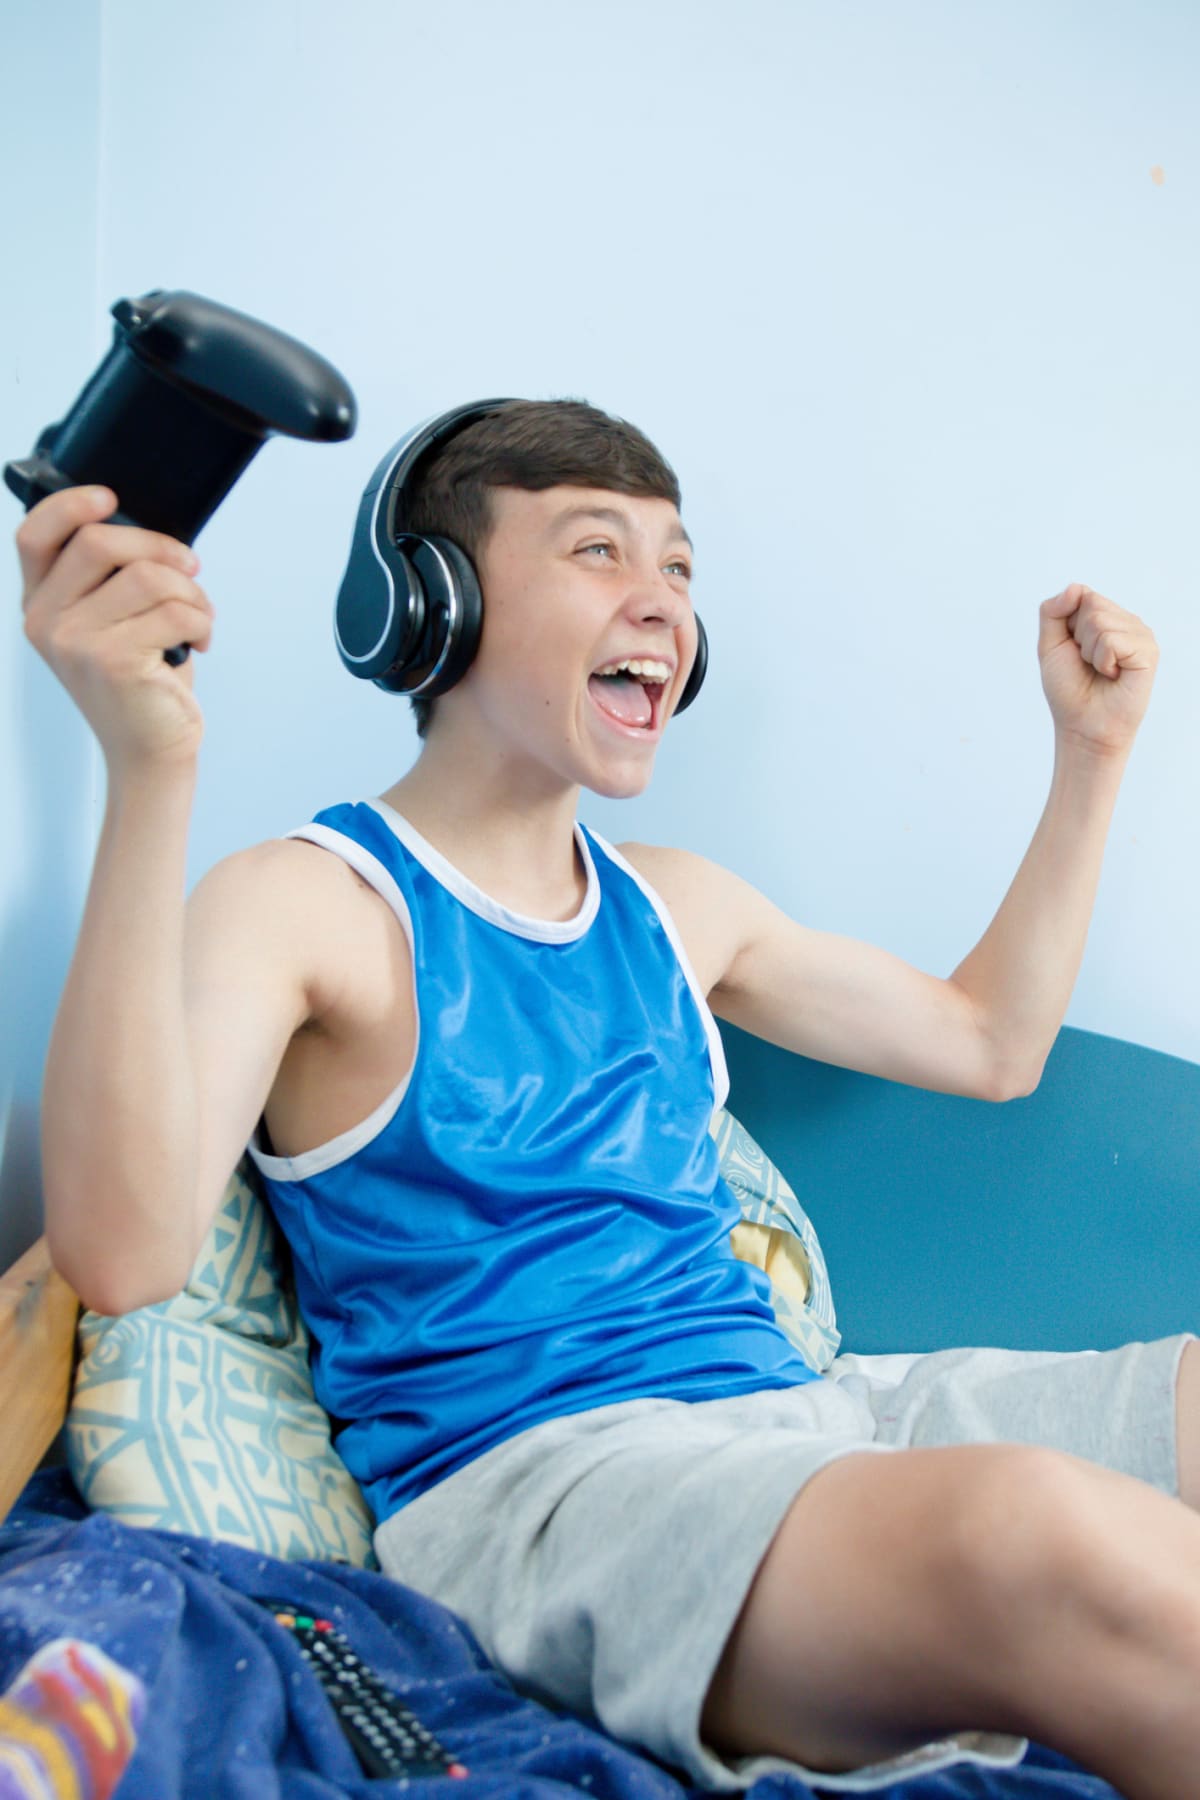 A boy having fun playing video games